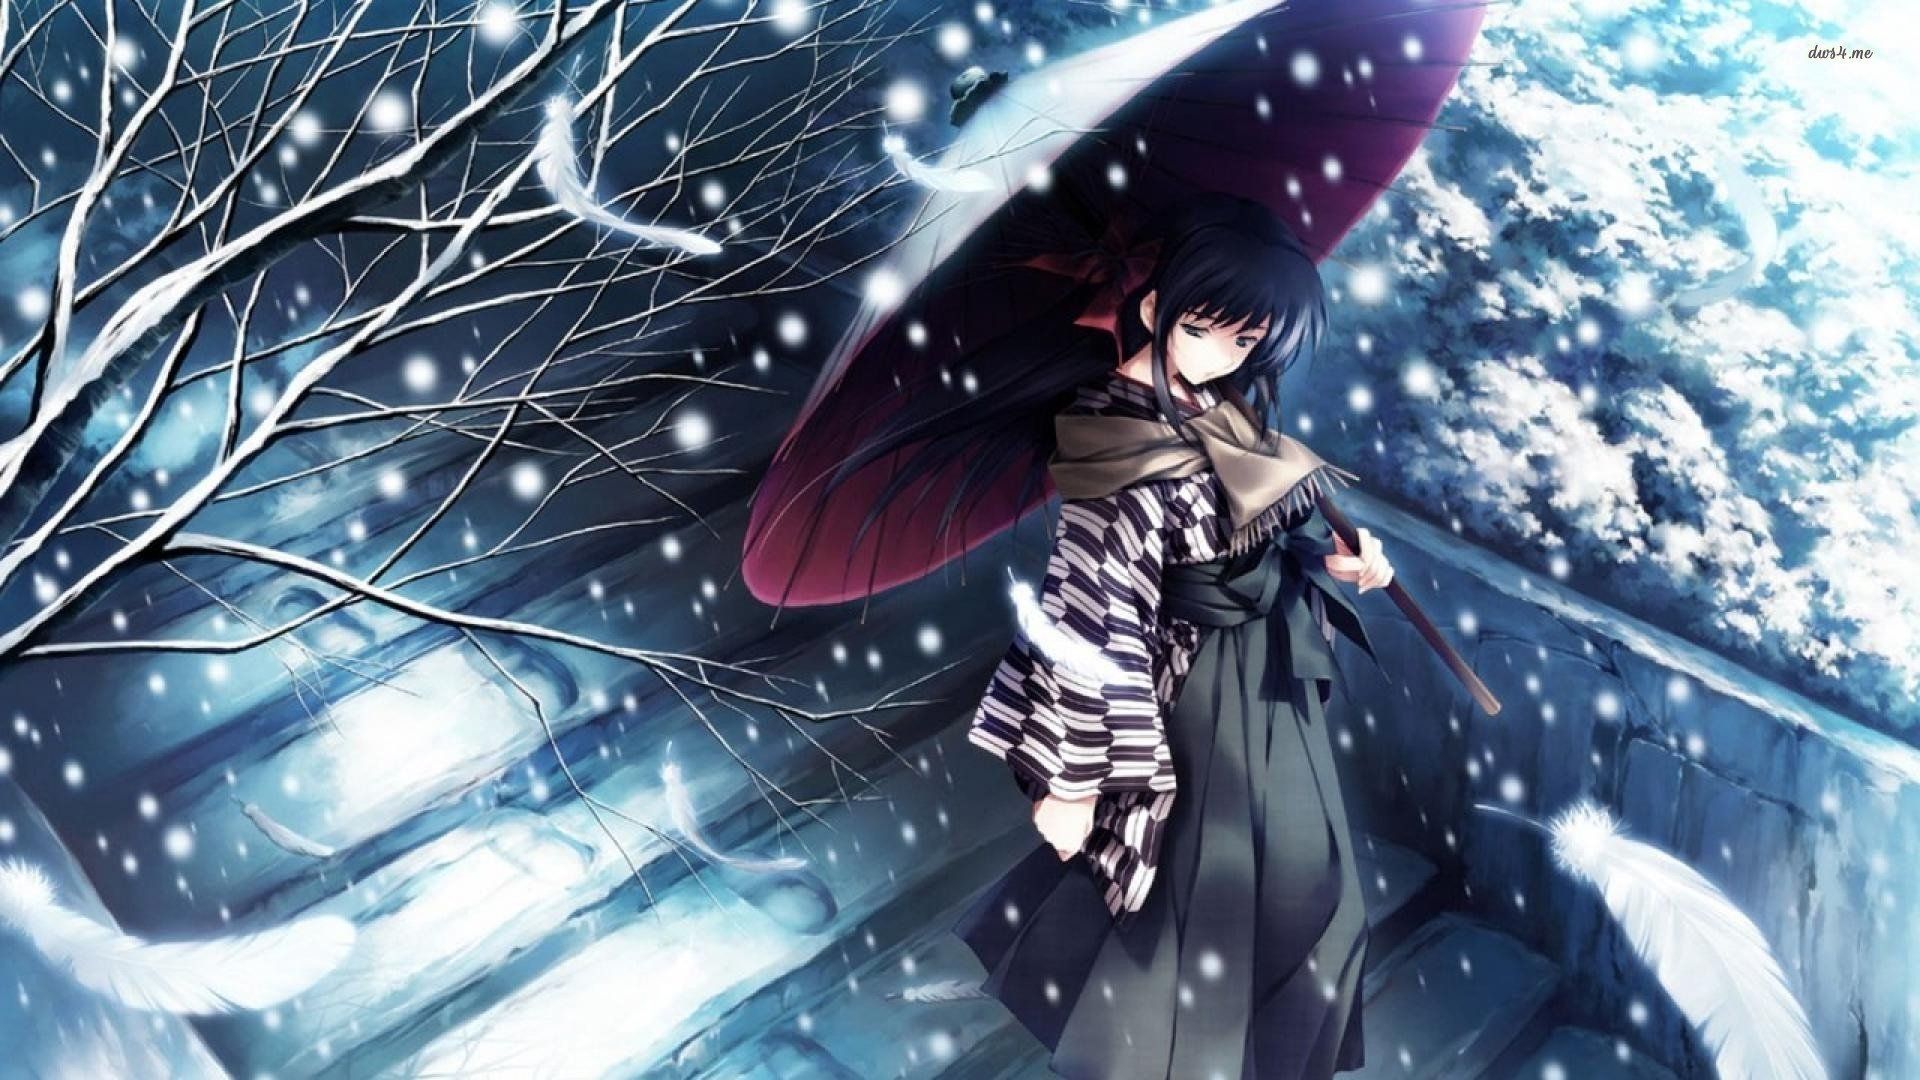 Beautiful Anime Wallpaper Winter